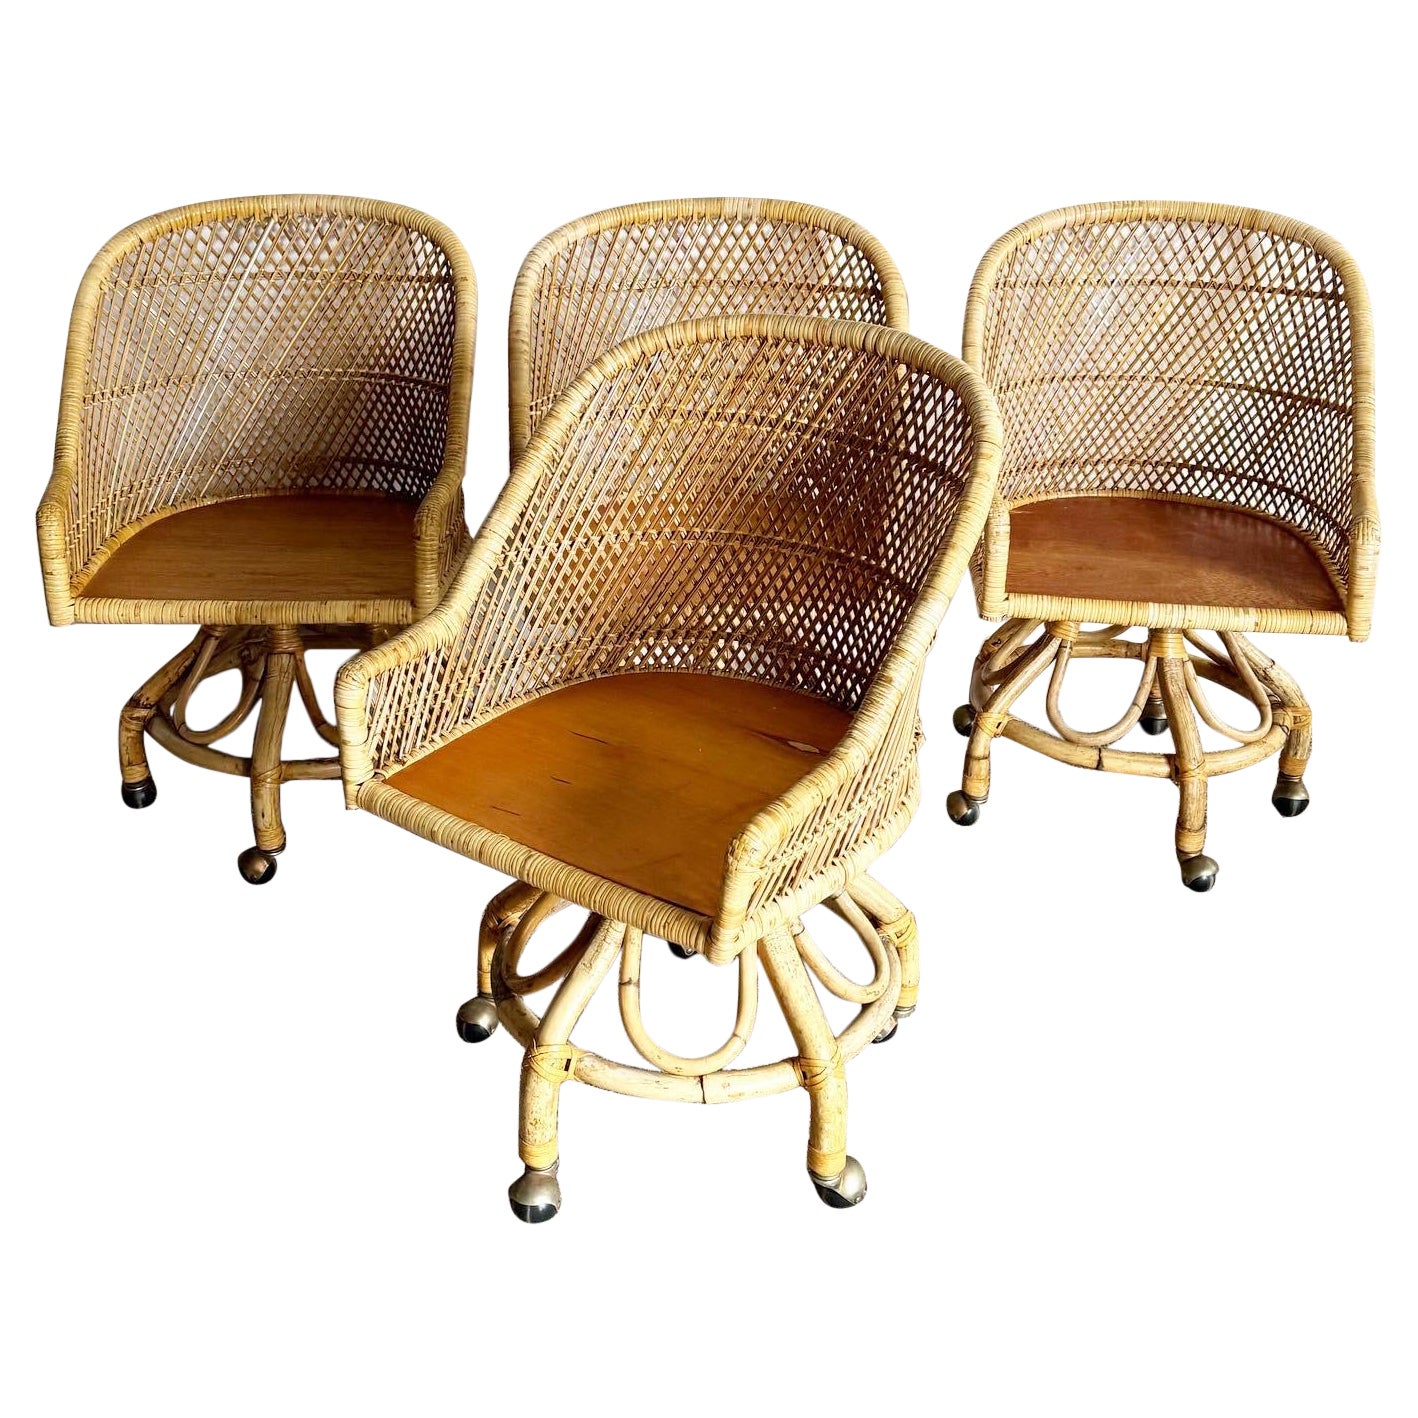 Boho Chic Buri Rattan Bamboo Swivel Barrel Dining Chairs on Casters - Set of 4